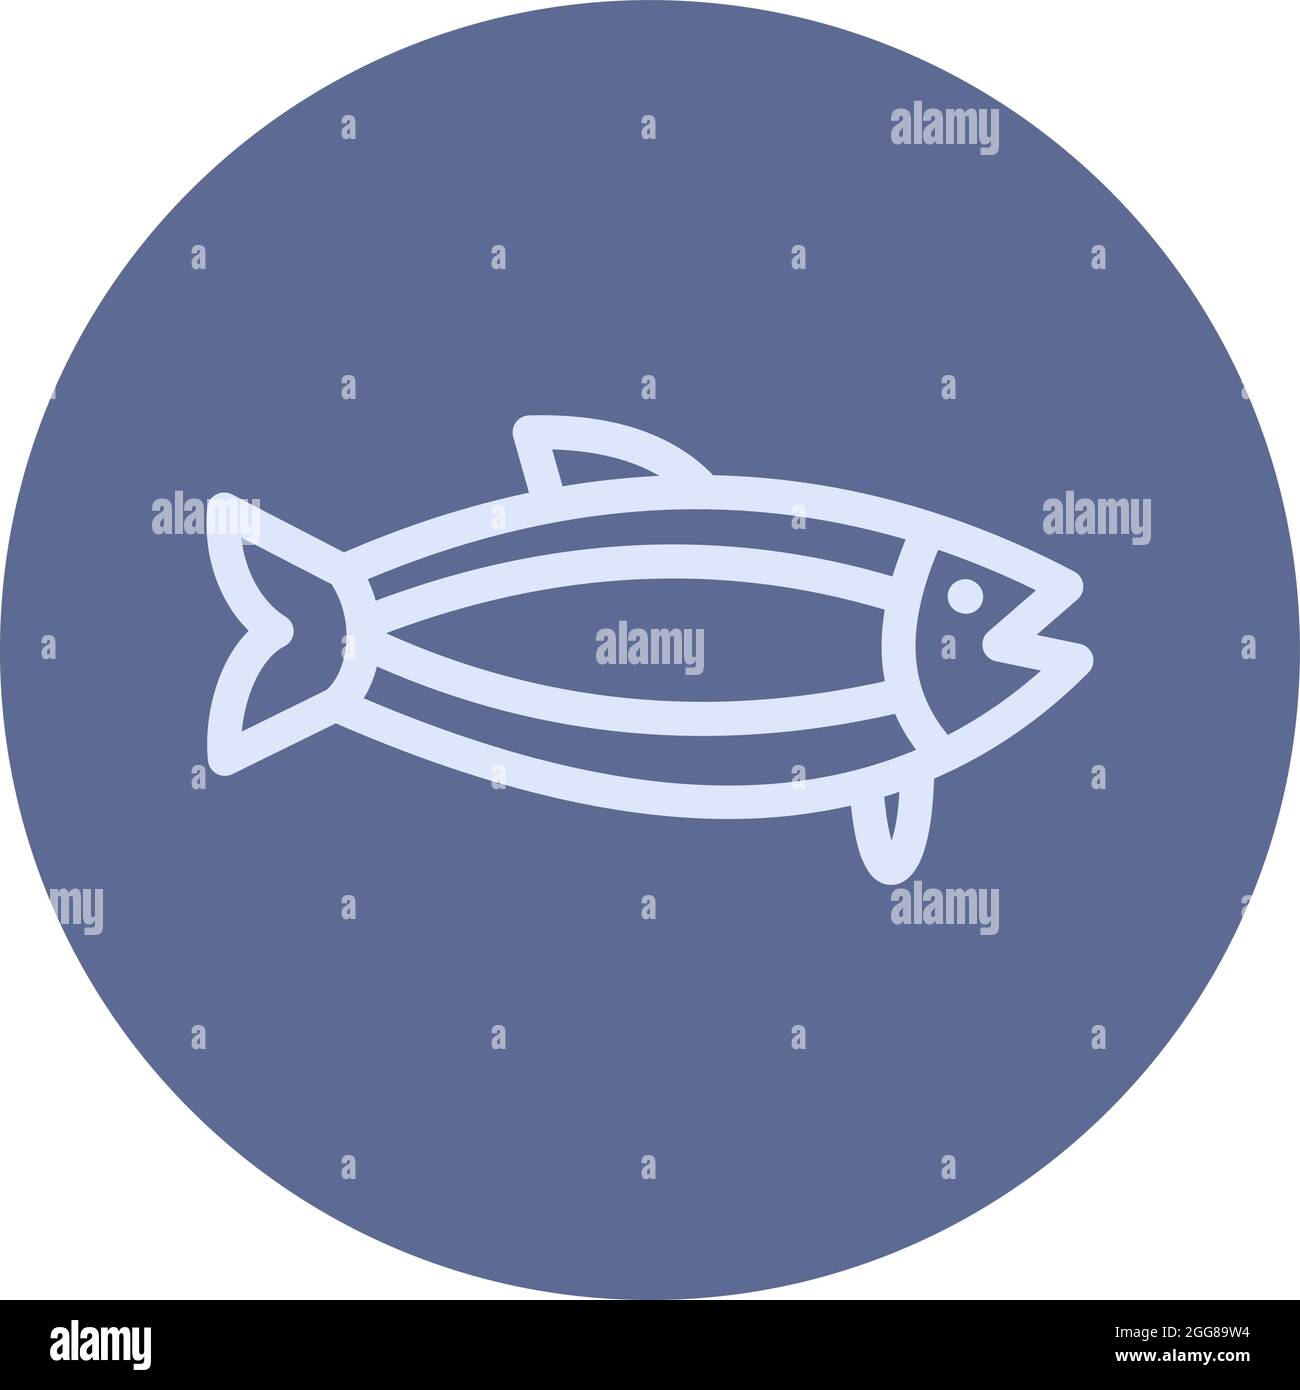 Blob Fish Isolated Stock Illustration - Download Image Now - Fish, Blob,  Illustration - iStock